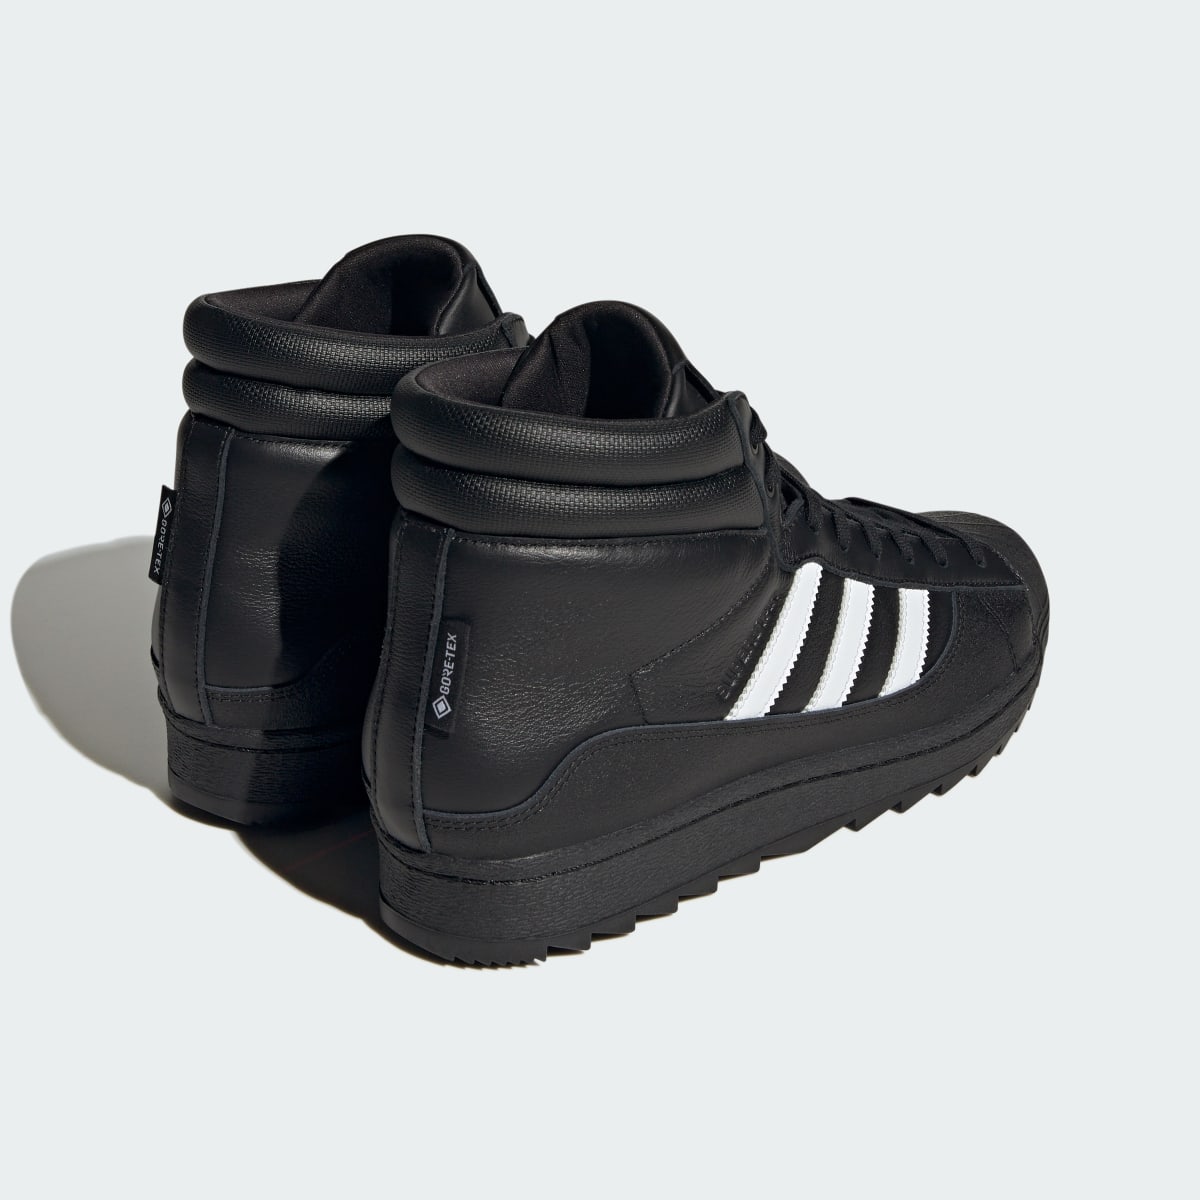 Adidas Superstar GORE-TEX Winter Boots. 6